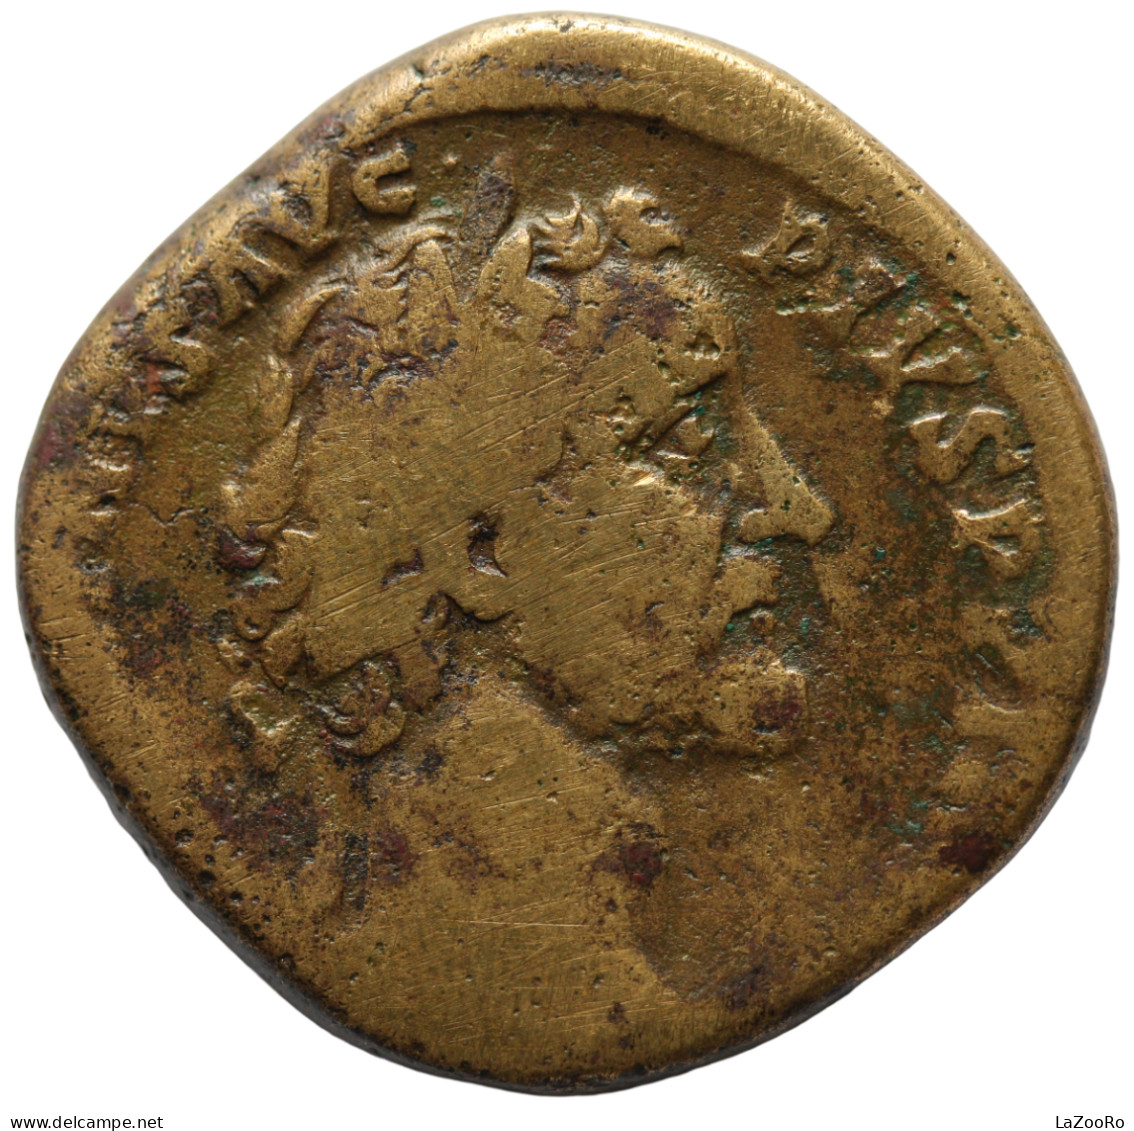 LaZooRo: Roman Empire - AE Sestertius Of Antoninus Pius (138 - 161 AD), Annona - La Dinastía Antonina (96 / 192)